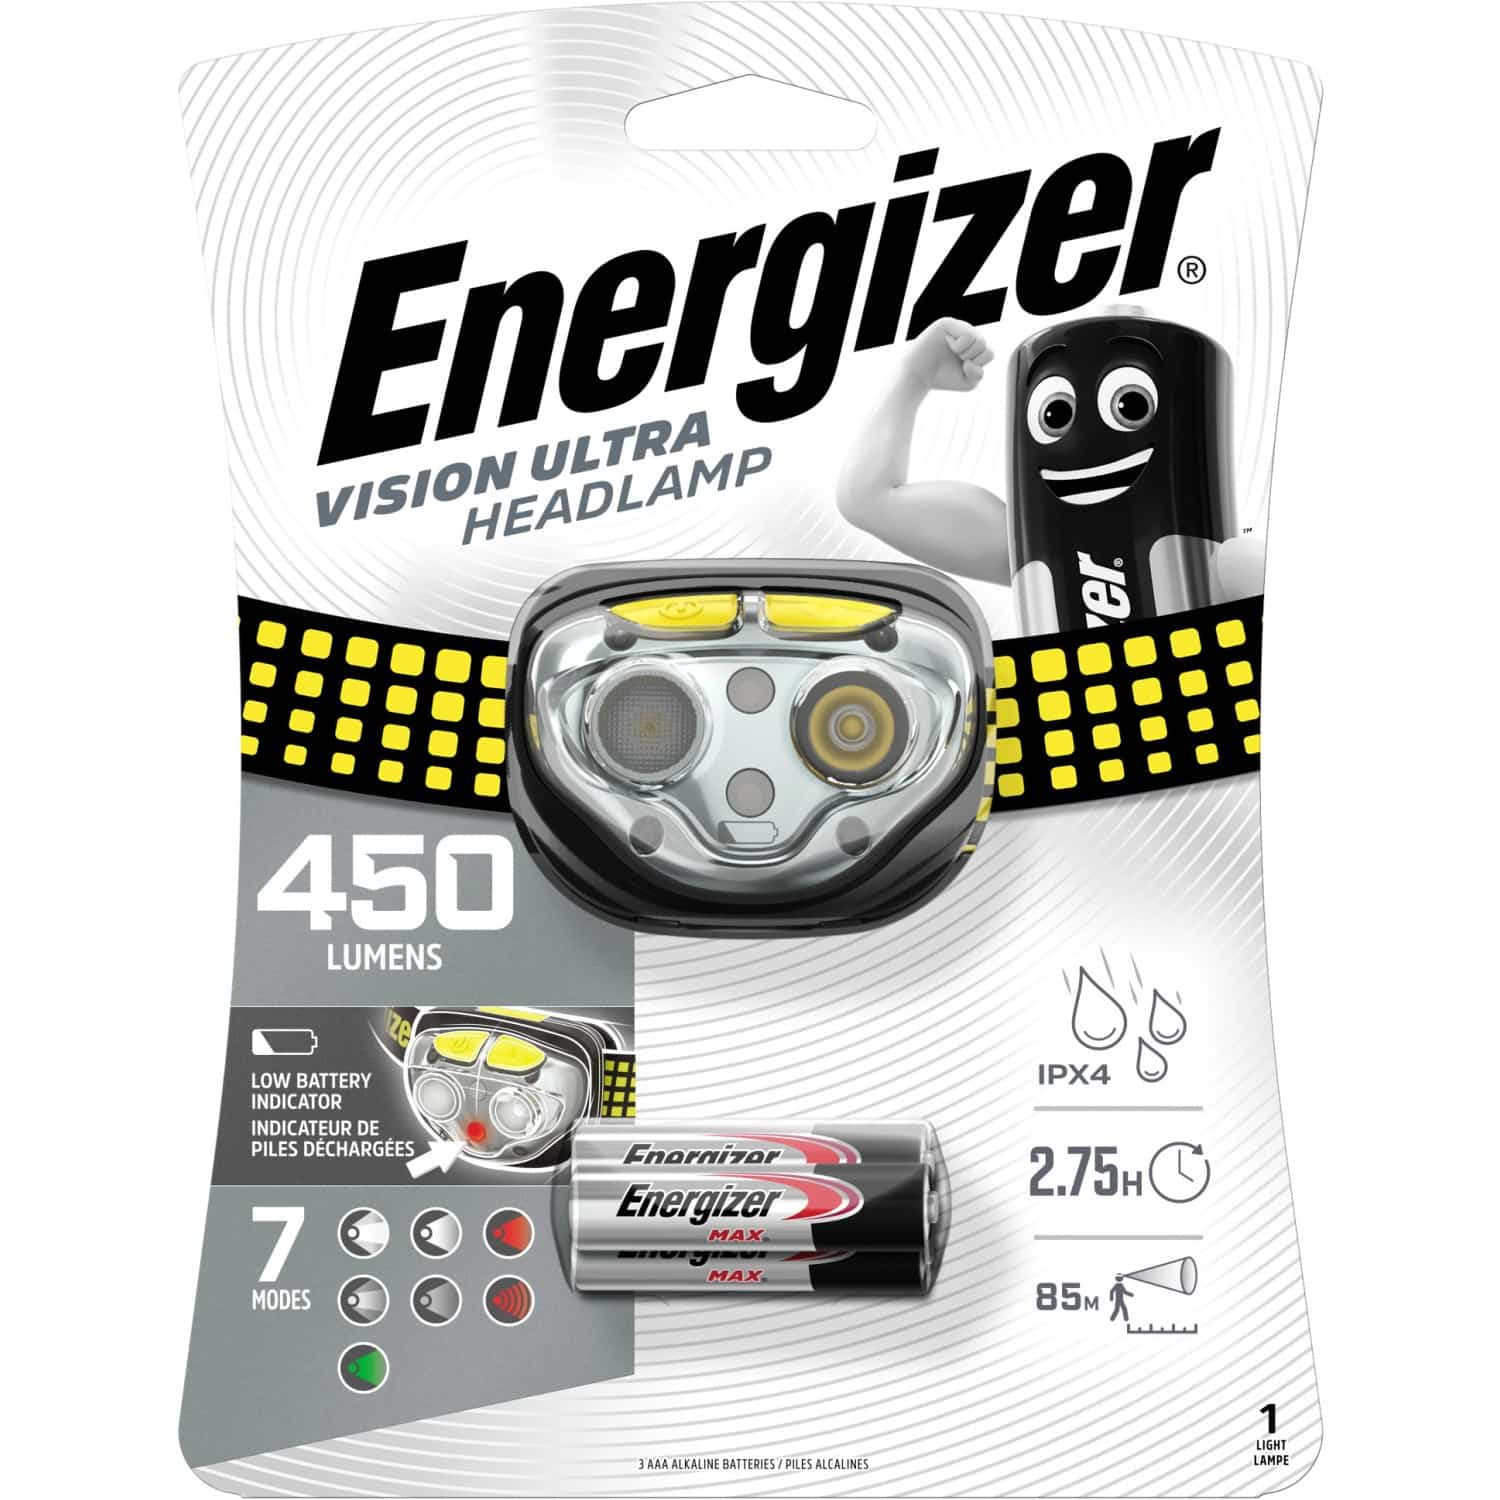 Energizer Kopflampe Vision Ultra Headlamp 3xAAA inkl.